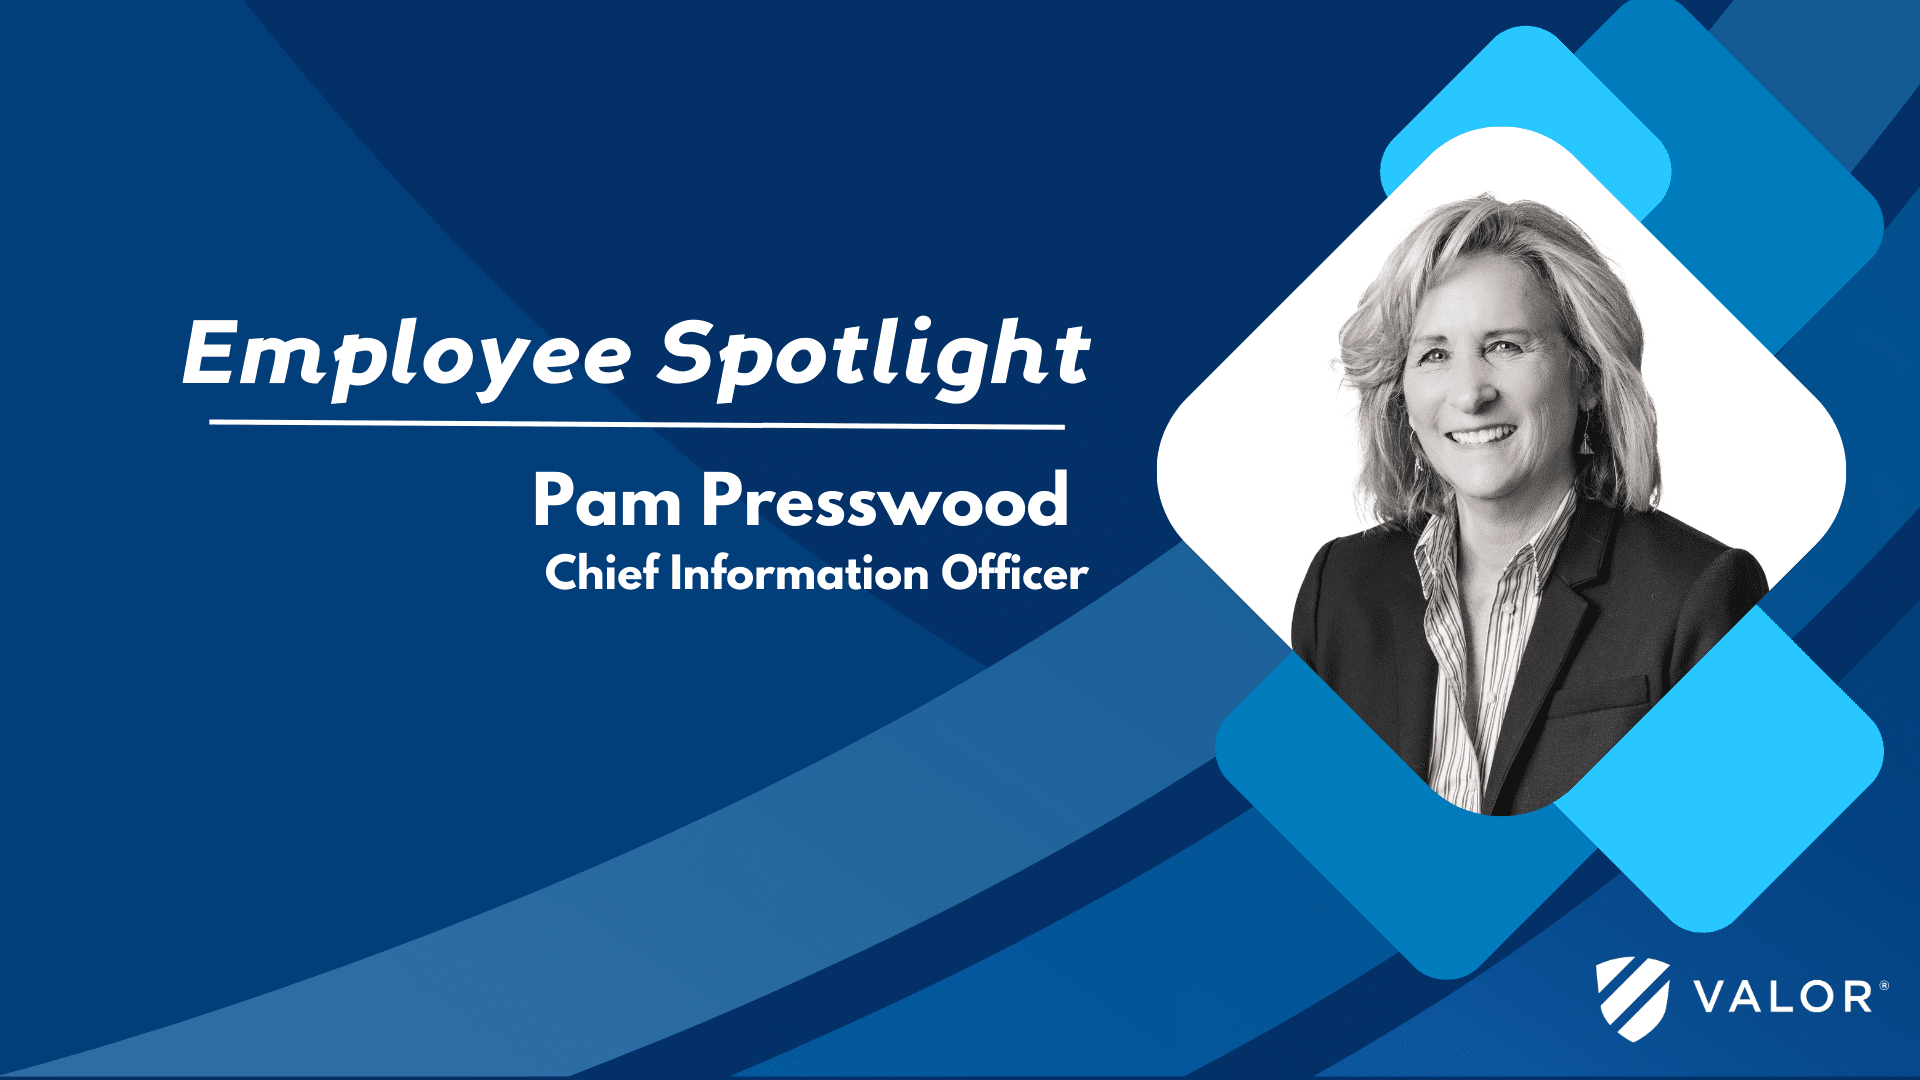 Pam Presswood Valor Chief Information Officer